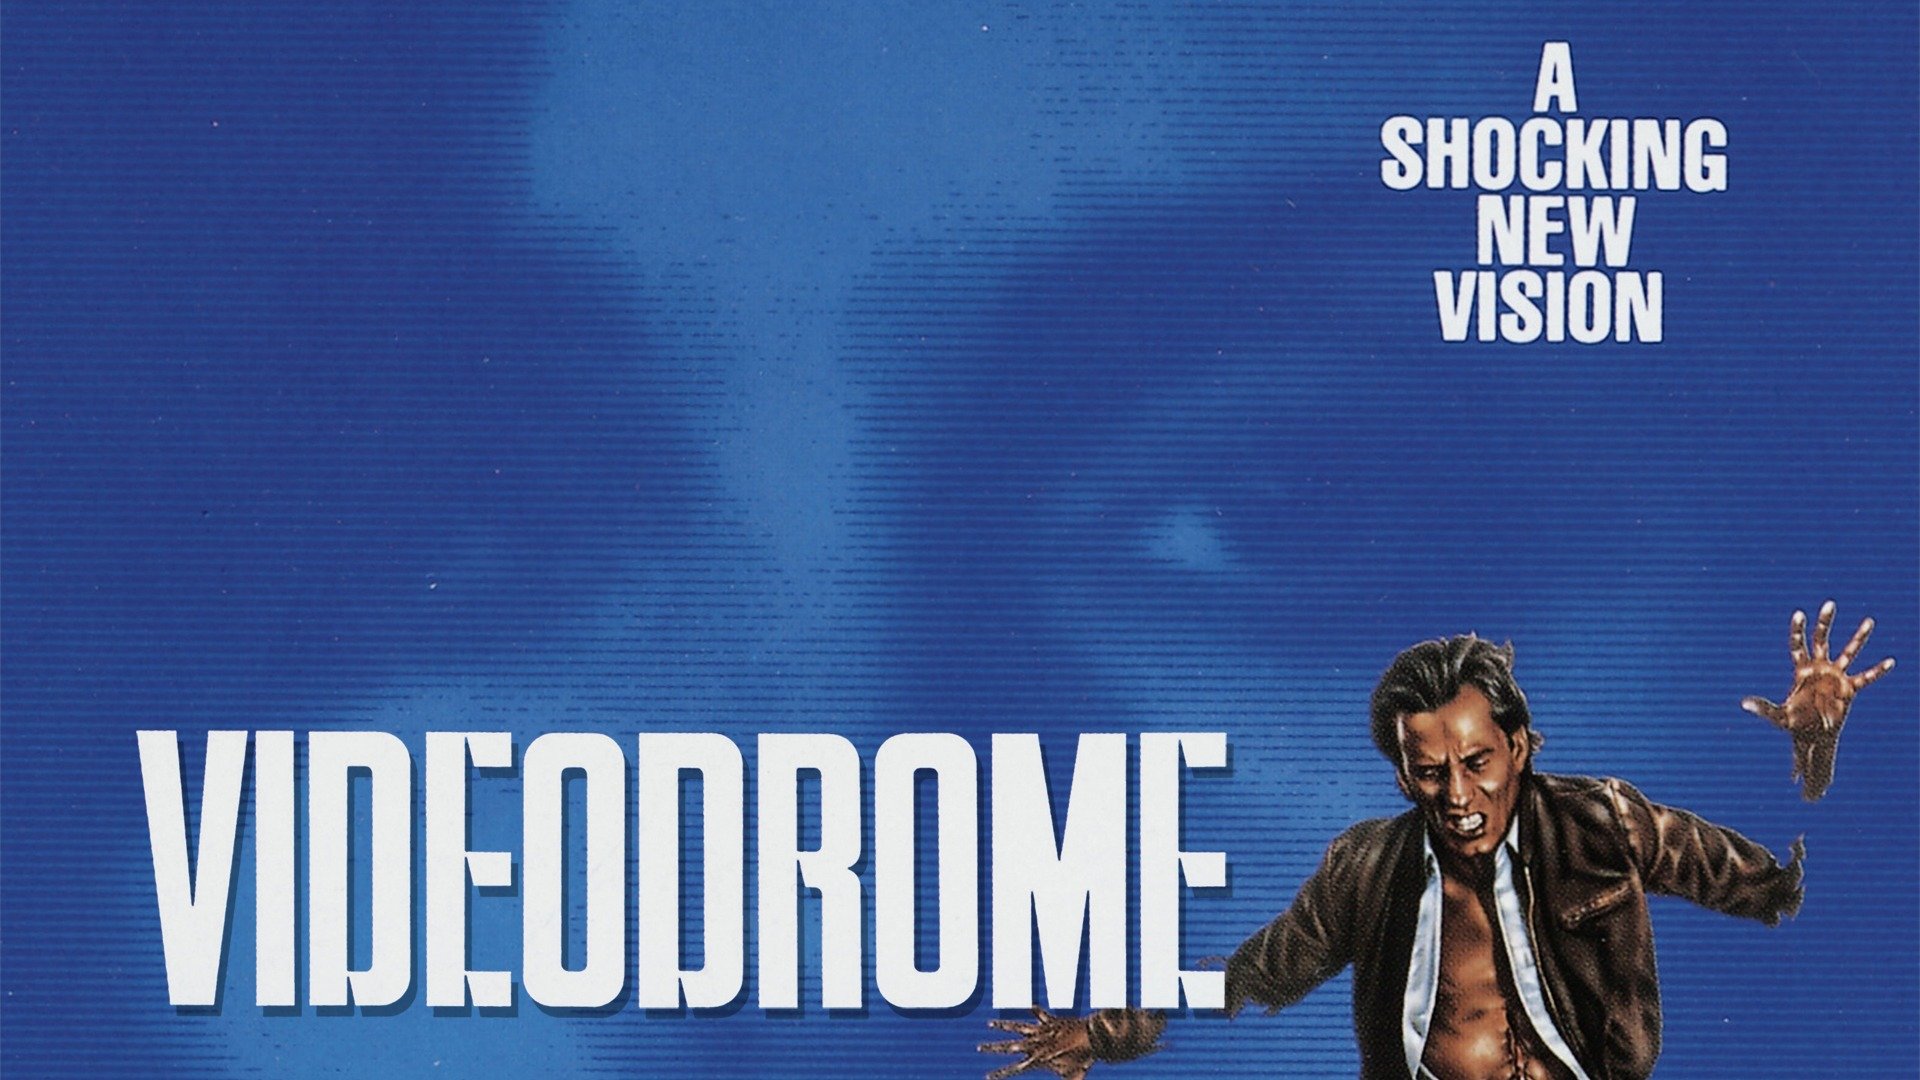 Watch: Original Making-Of Featurette For David Cronenberg's Horror Classic ' Videodrome'